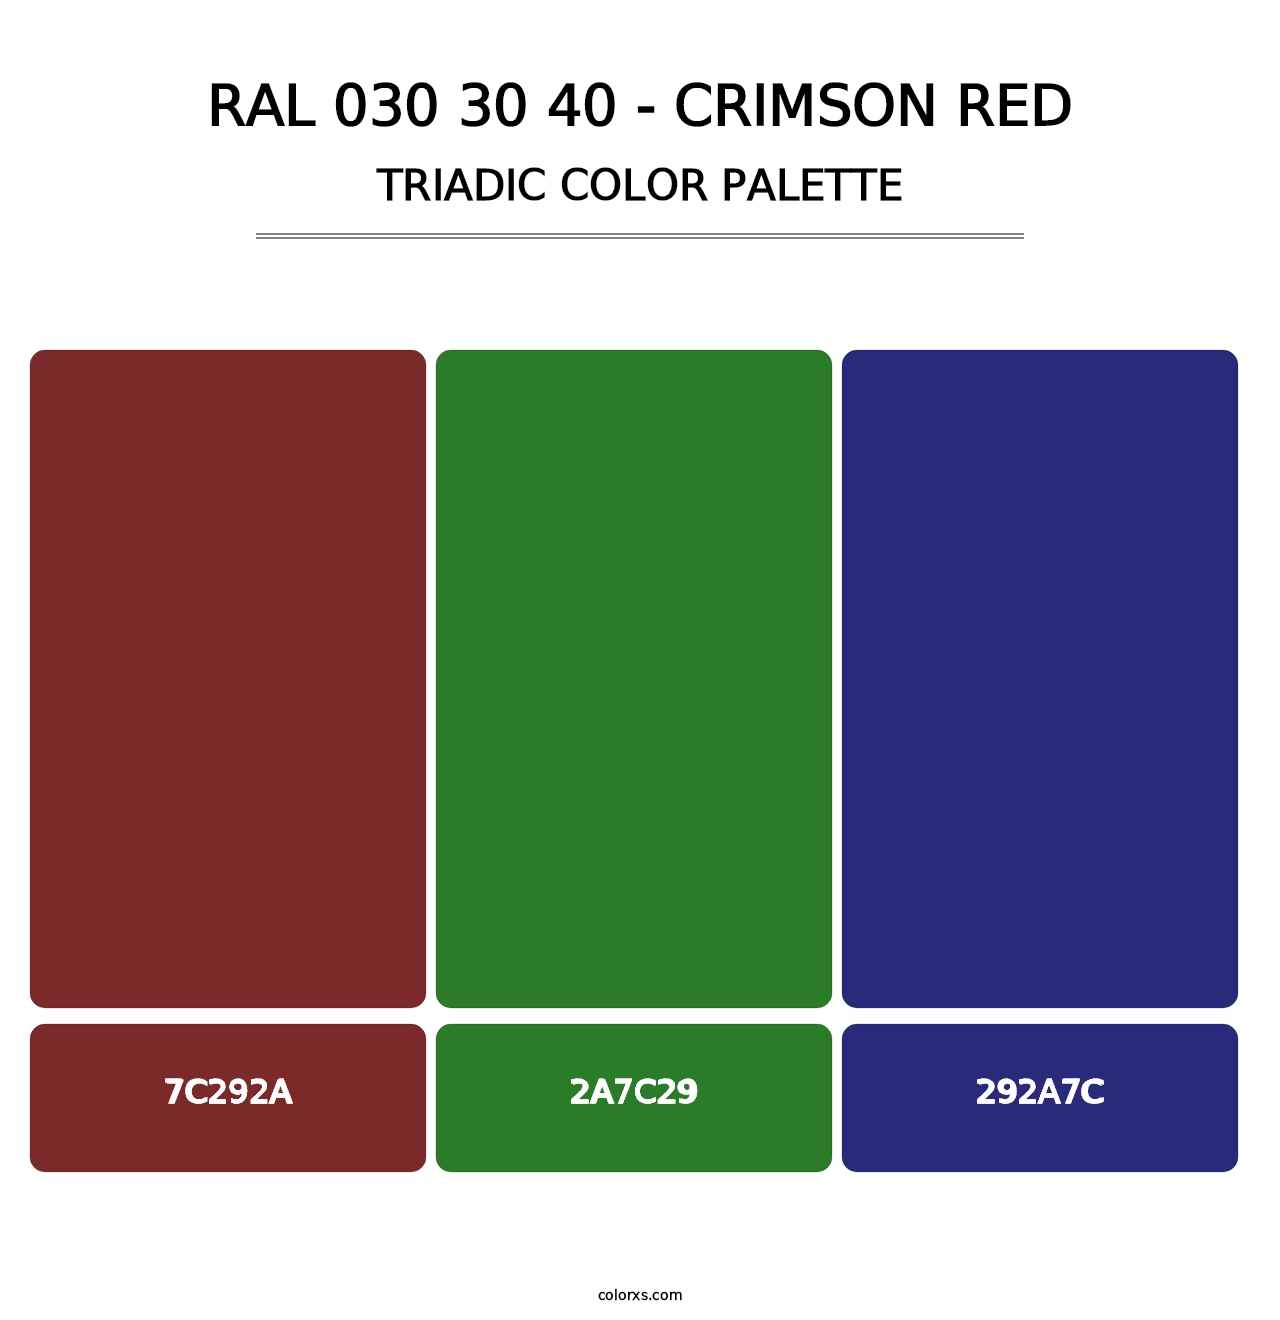 RAL 030 30 40 - Crimson Red - Triadic Color Palette